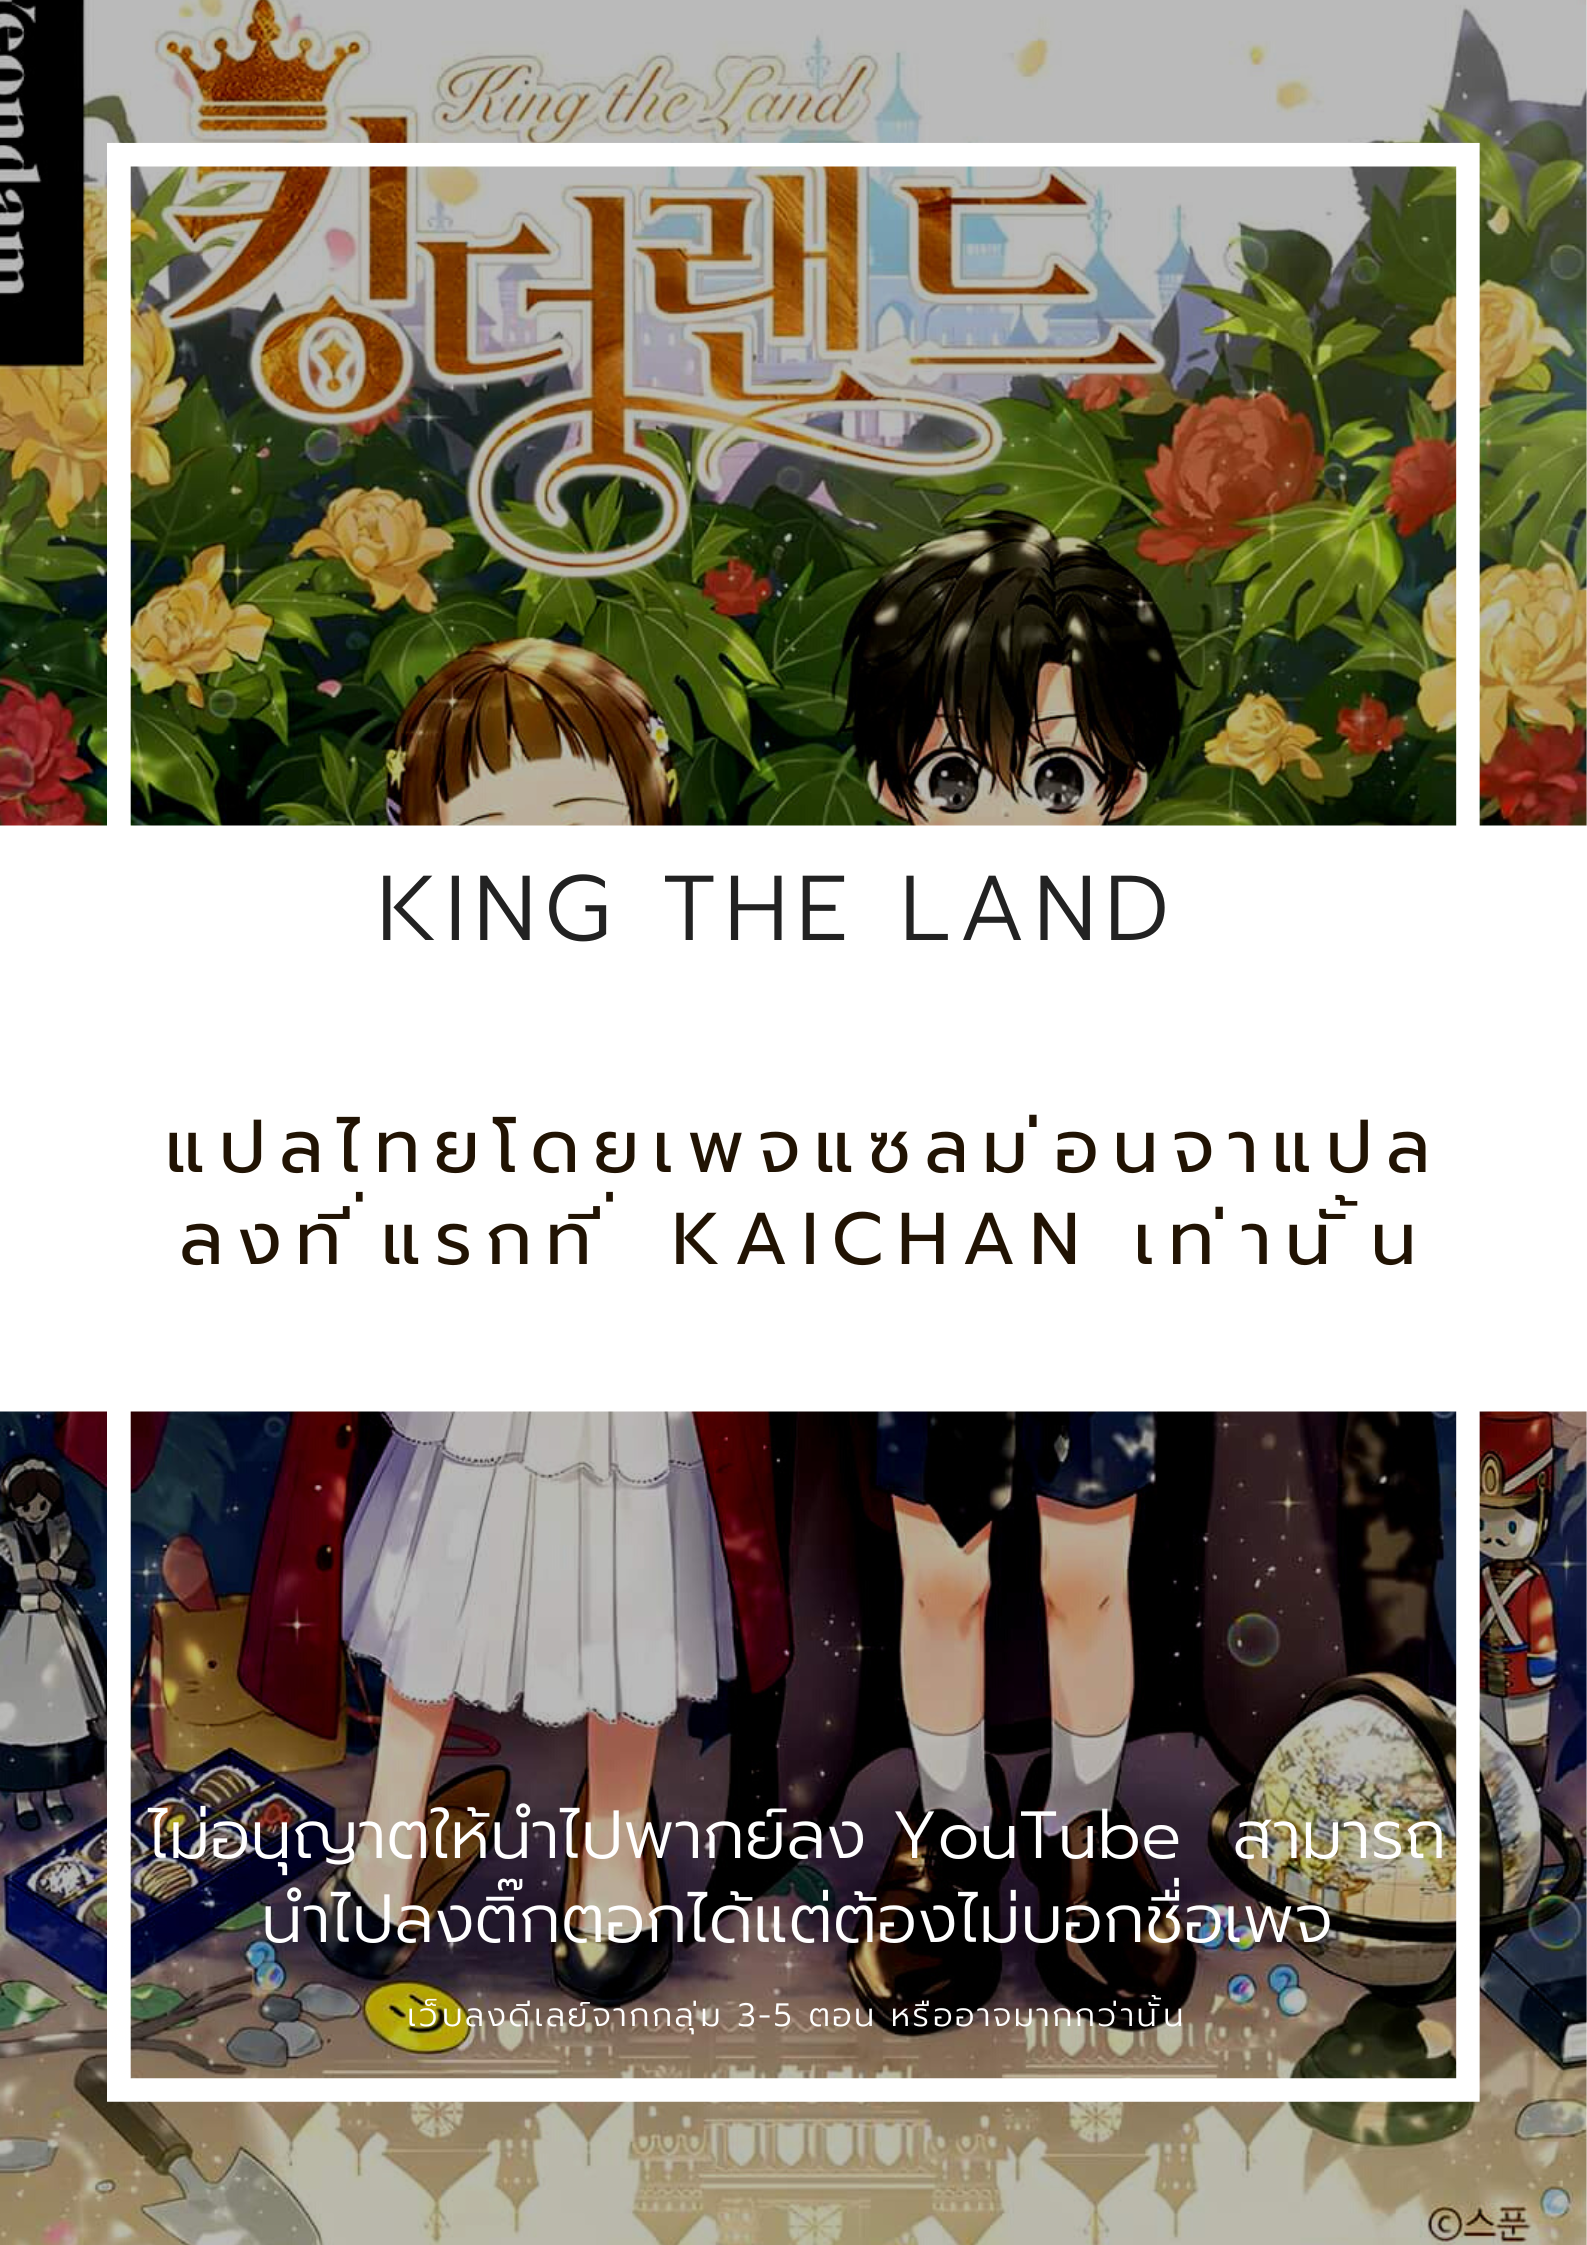 King the land ตอนที่ 3 (1)